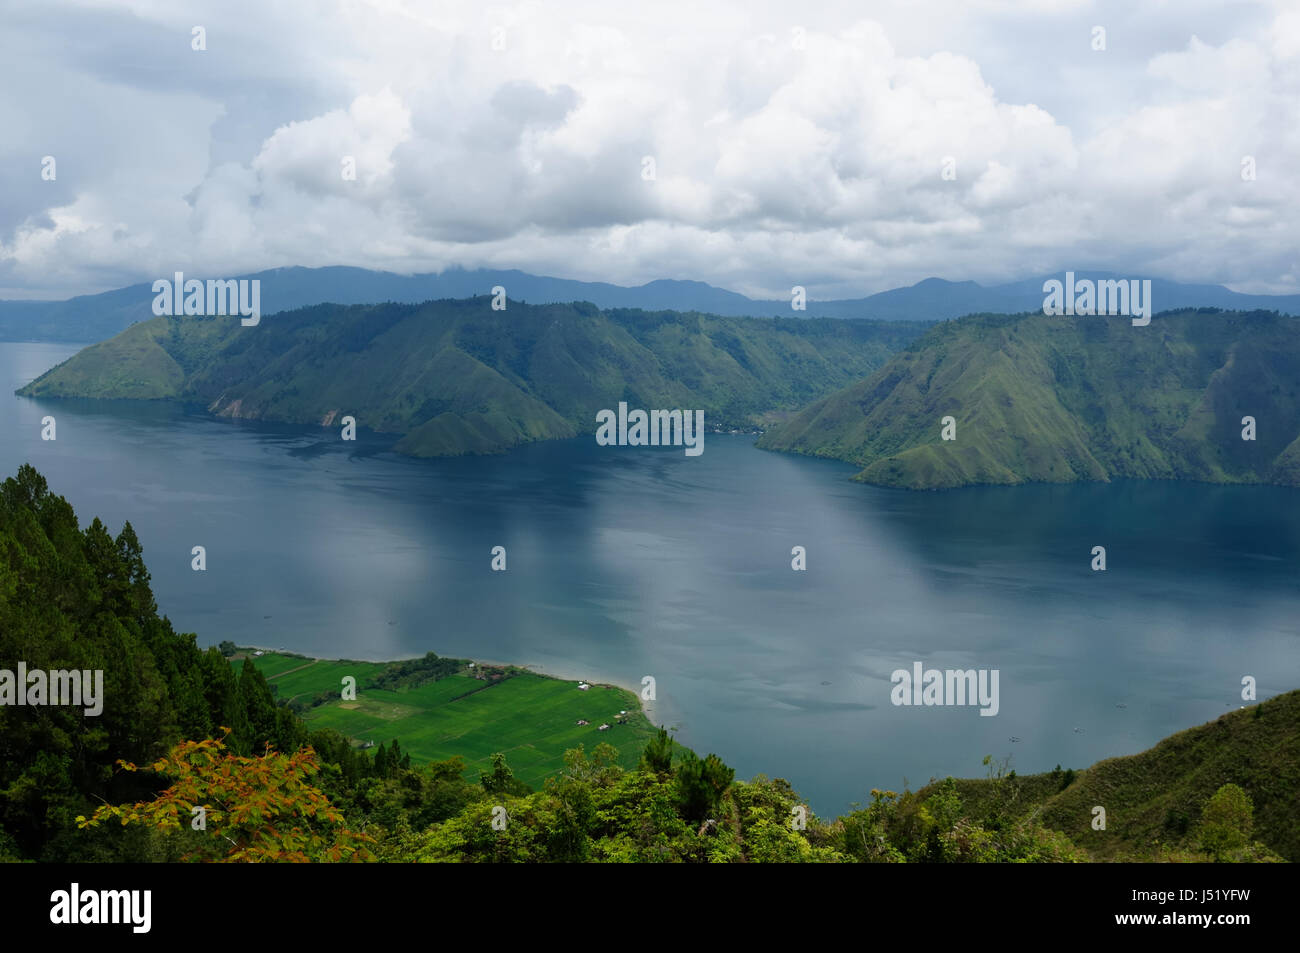 View from the Samosir island to Danau Toba (Toba lake), Indonesia, North Sumatra Stock Photo